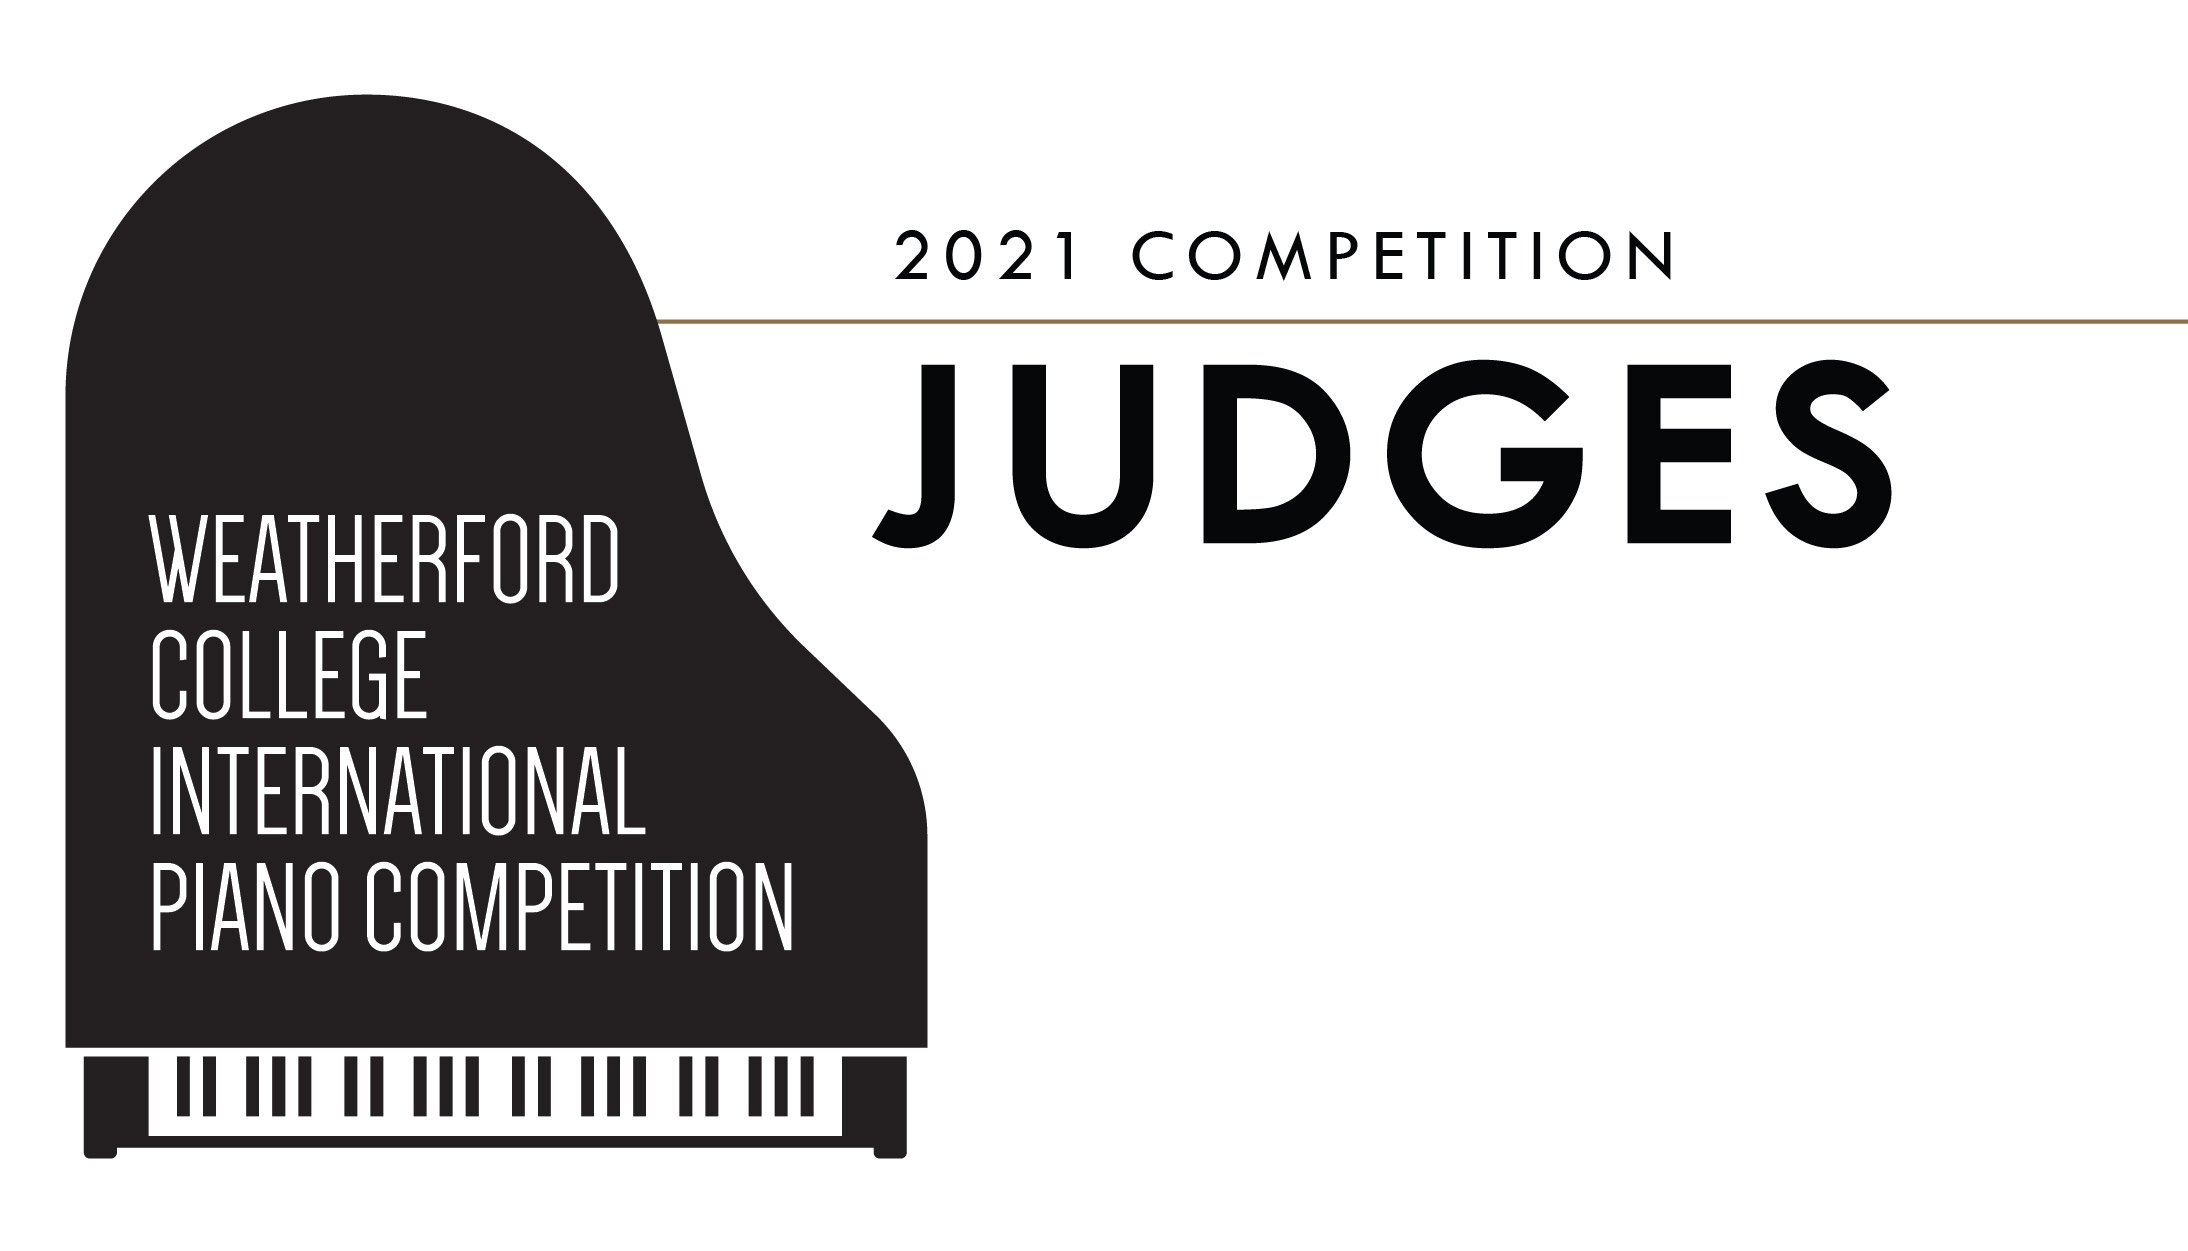 2021 Judges